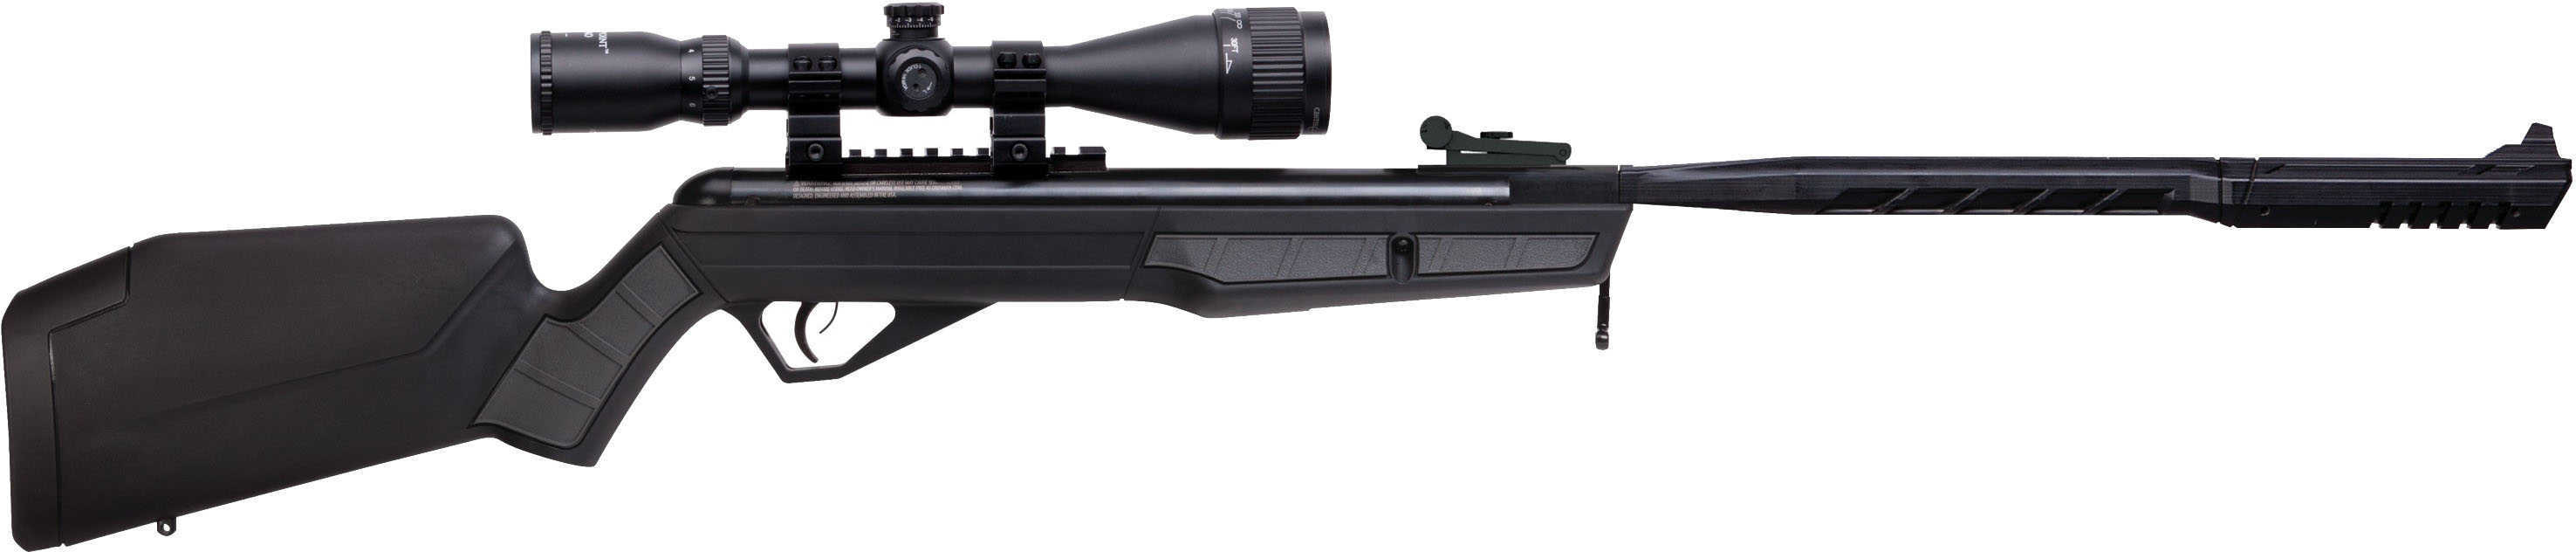 Benjamin BVH17TPSSSX Vaporizer Air Rifle Nitrogen Piston 177 Pellet Black Fixed Stock 3-9X40mm Scope